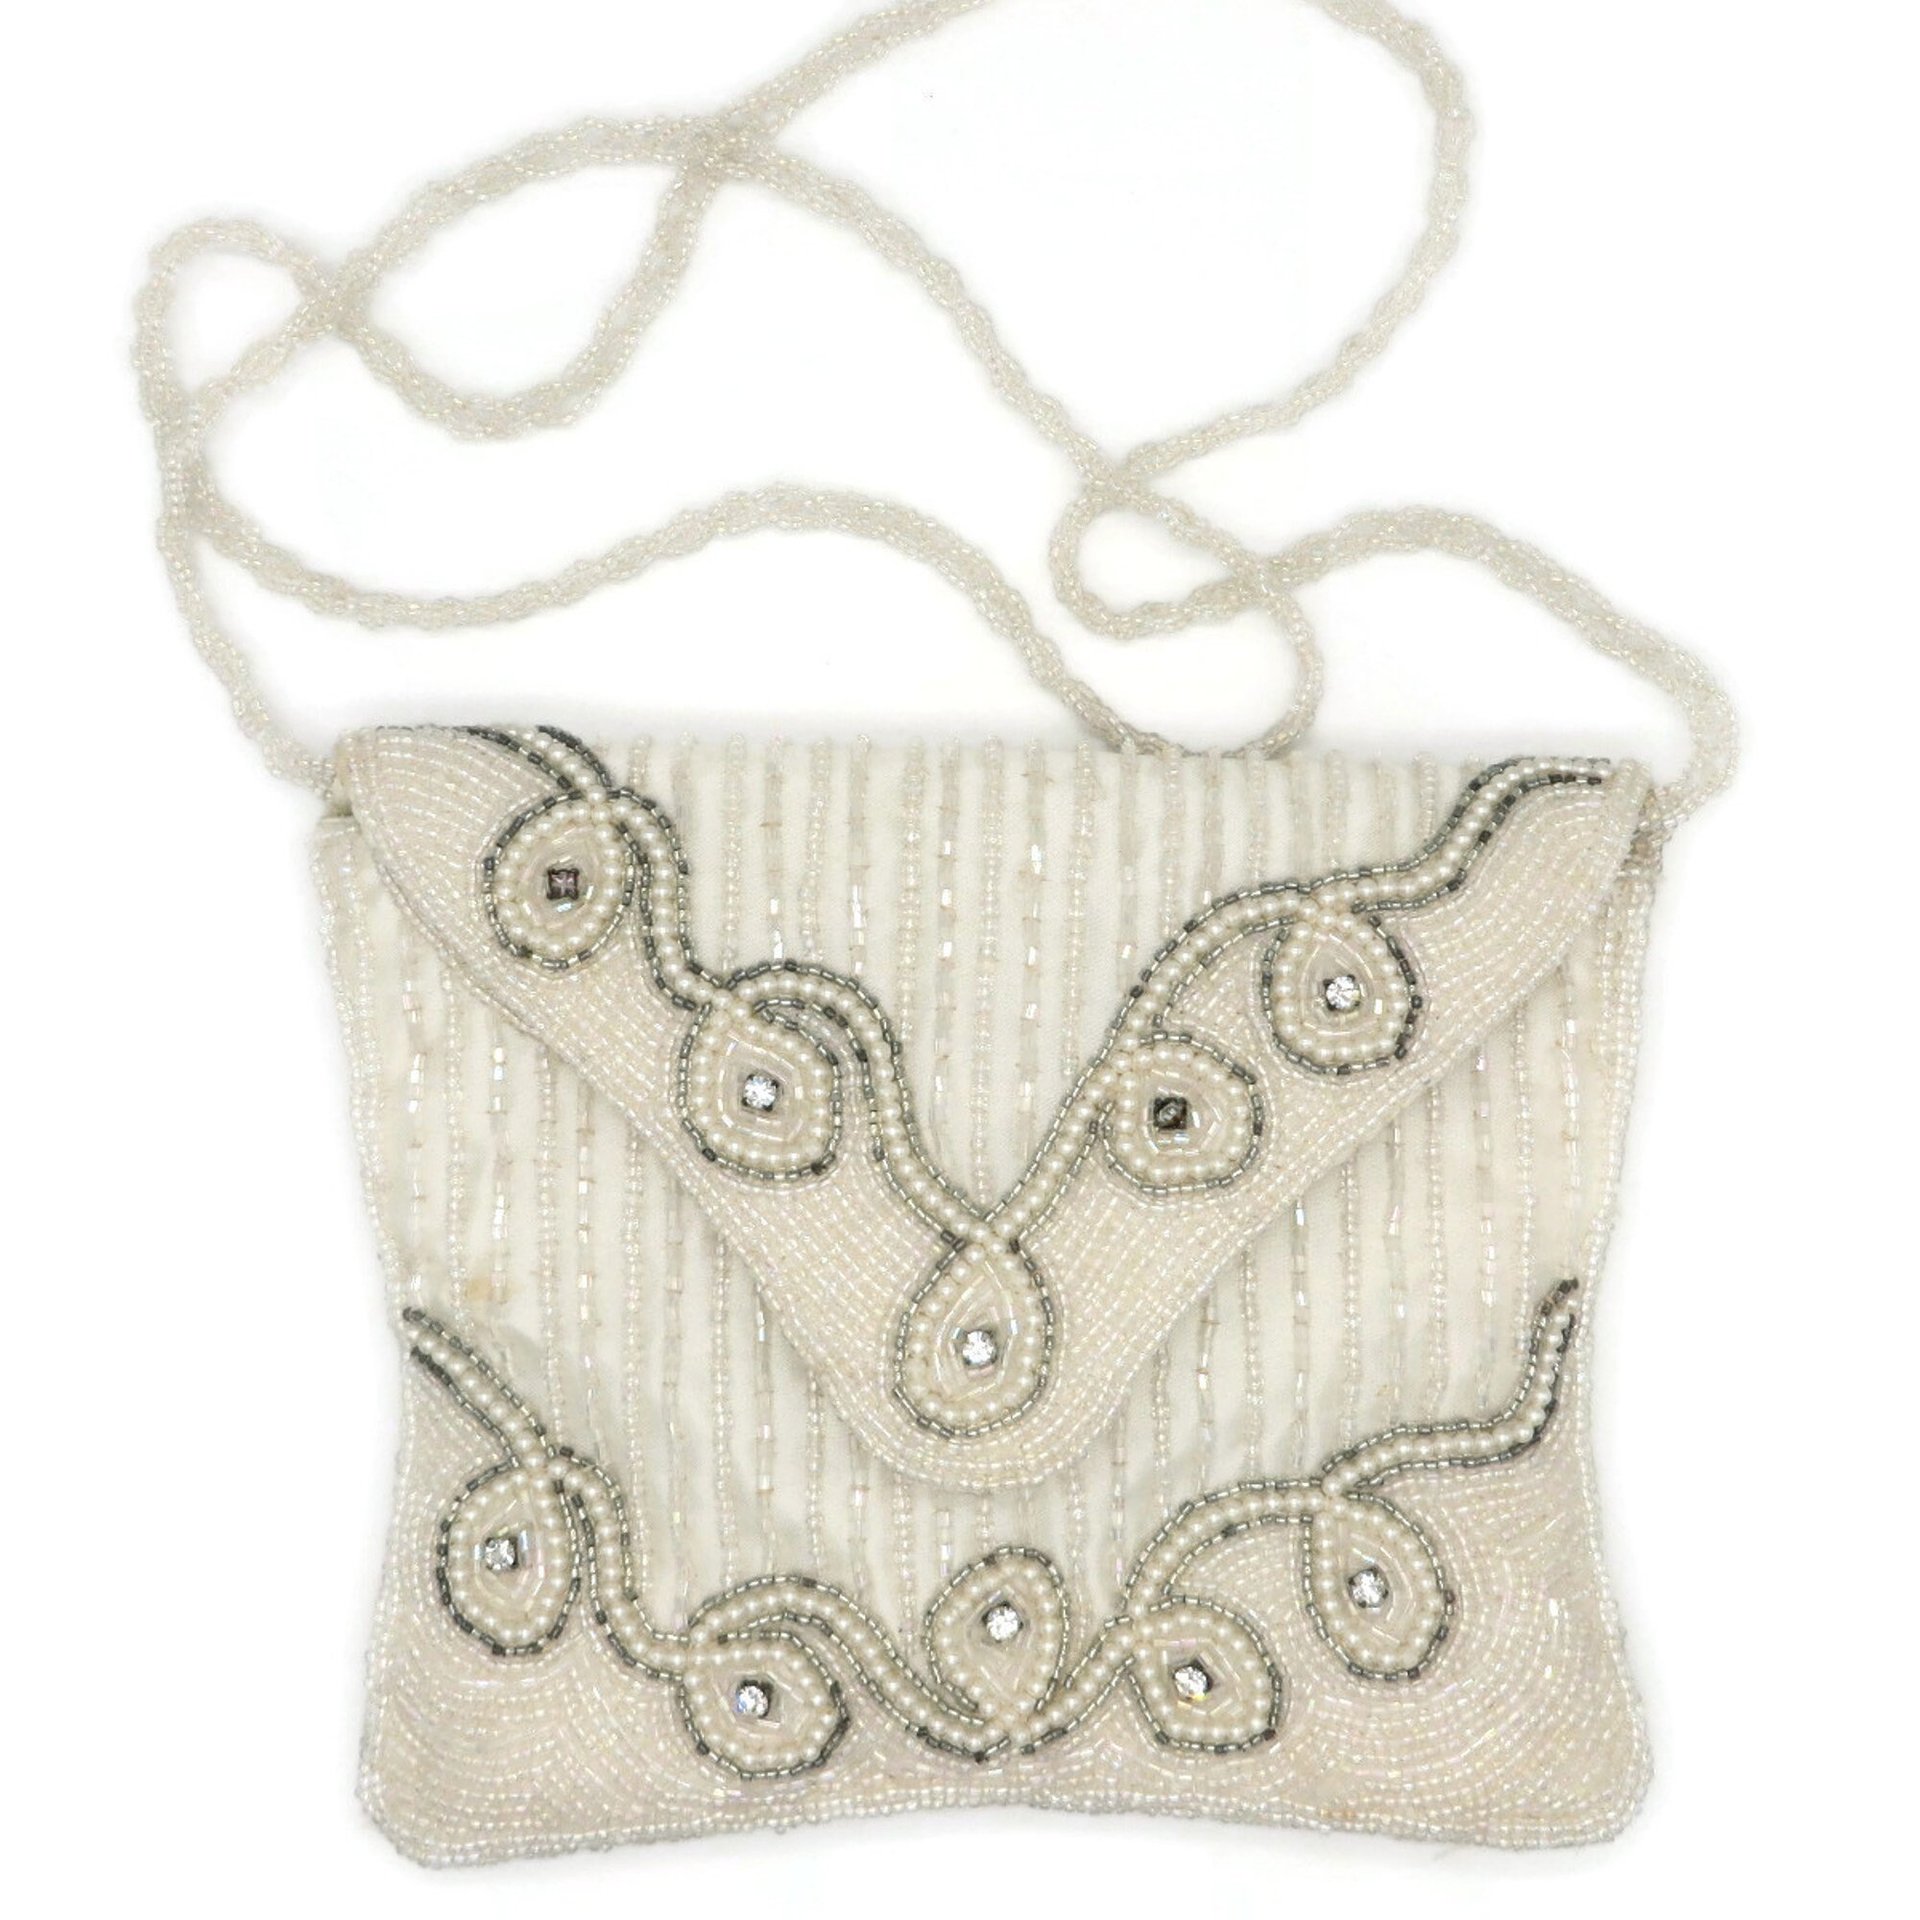 La Regale Purse, Long Handled Cream Beaded Handbag